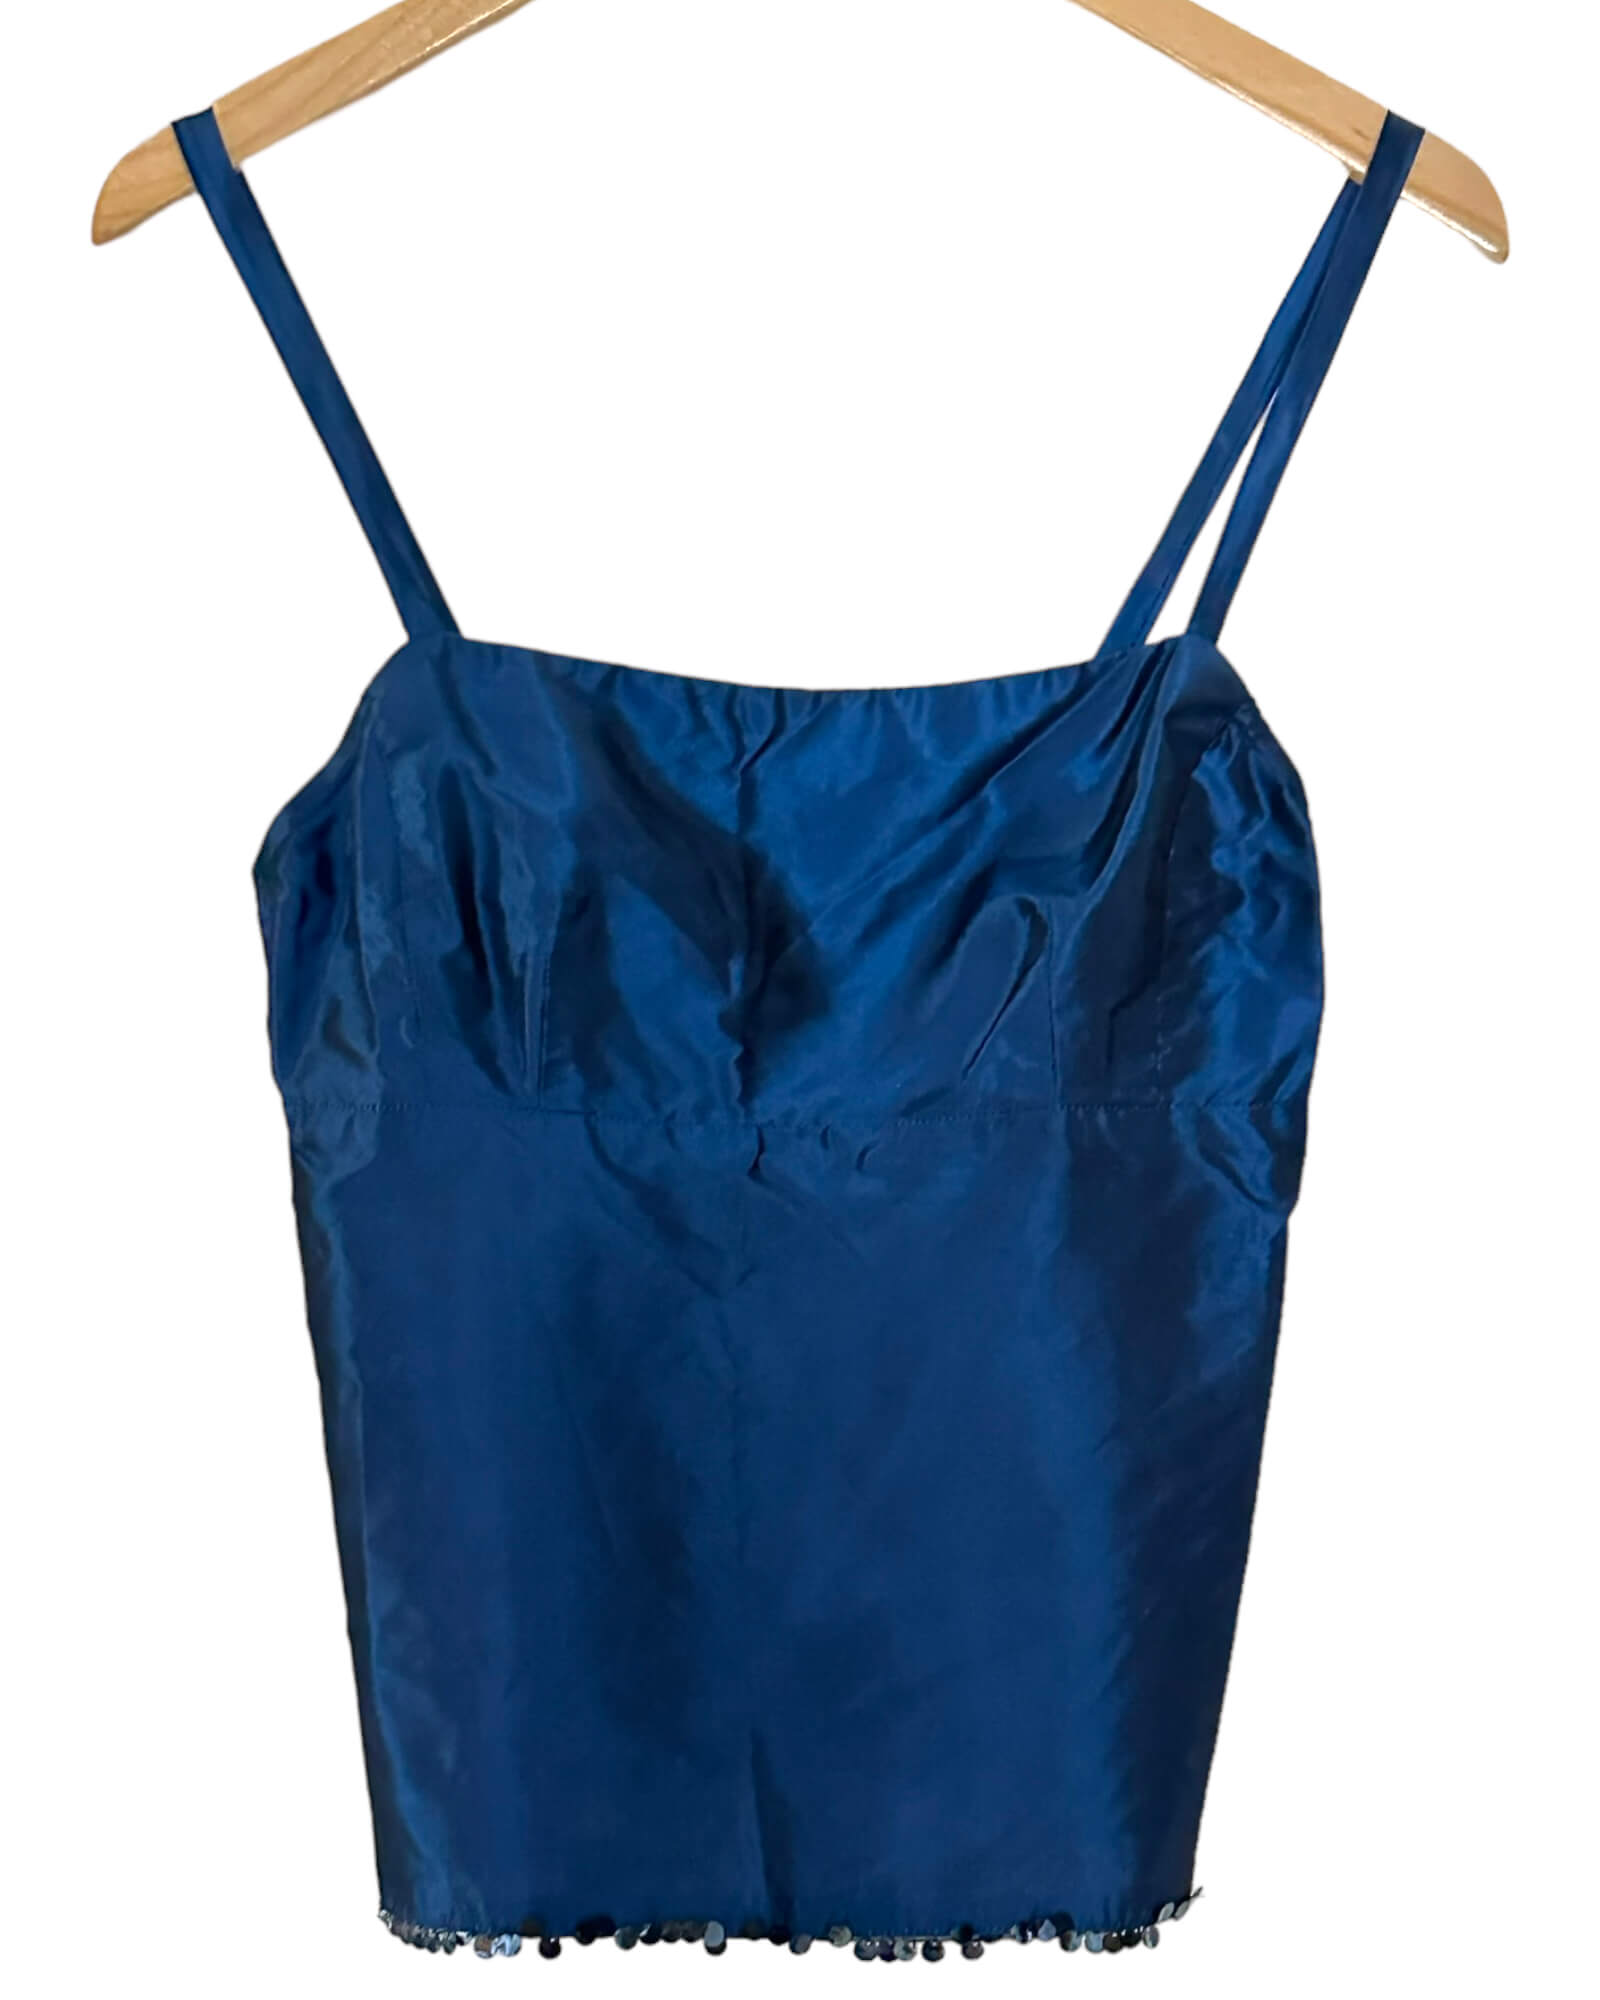 Dark Winter NANETTE LEPORE midnight blue sequin backless silk top